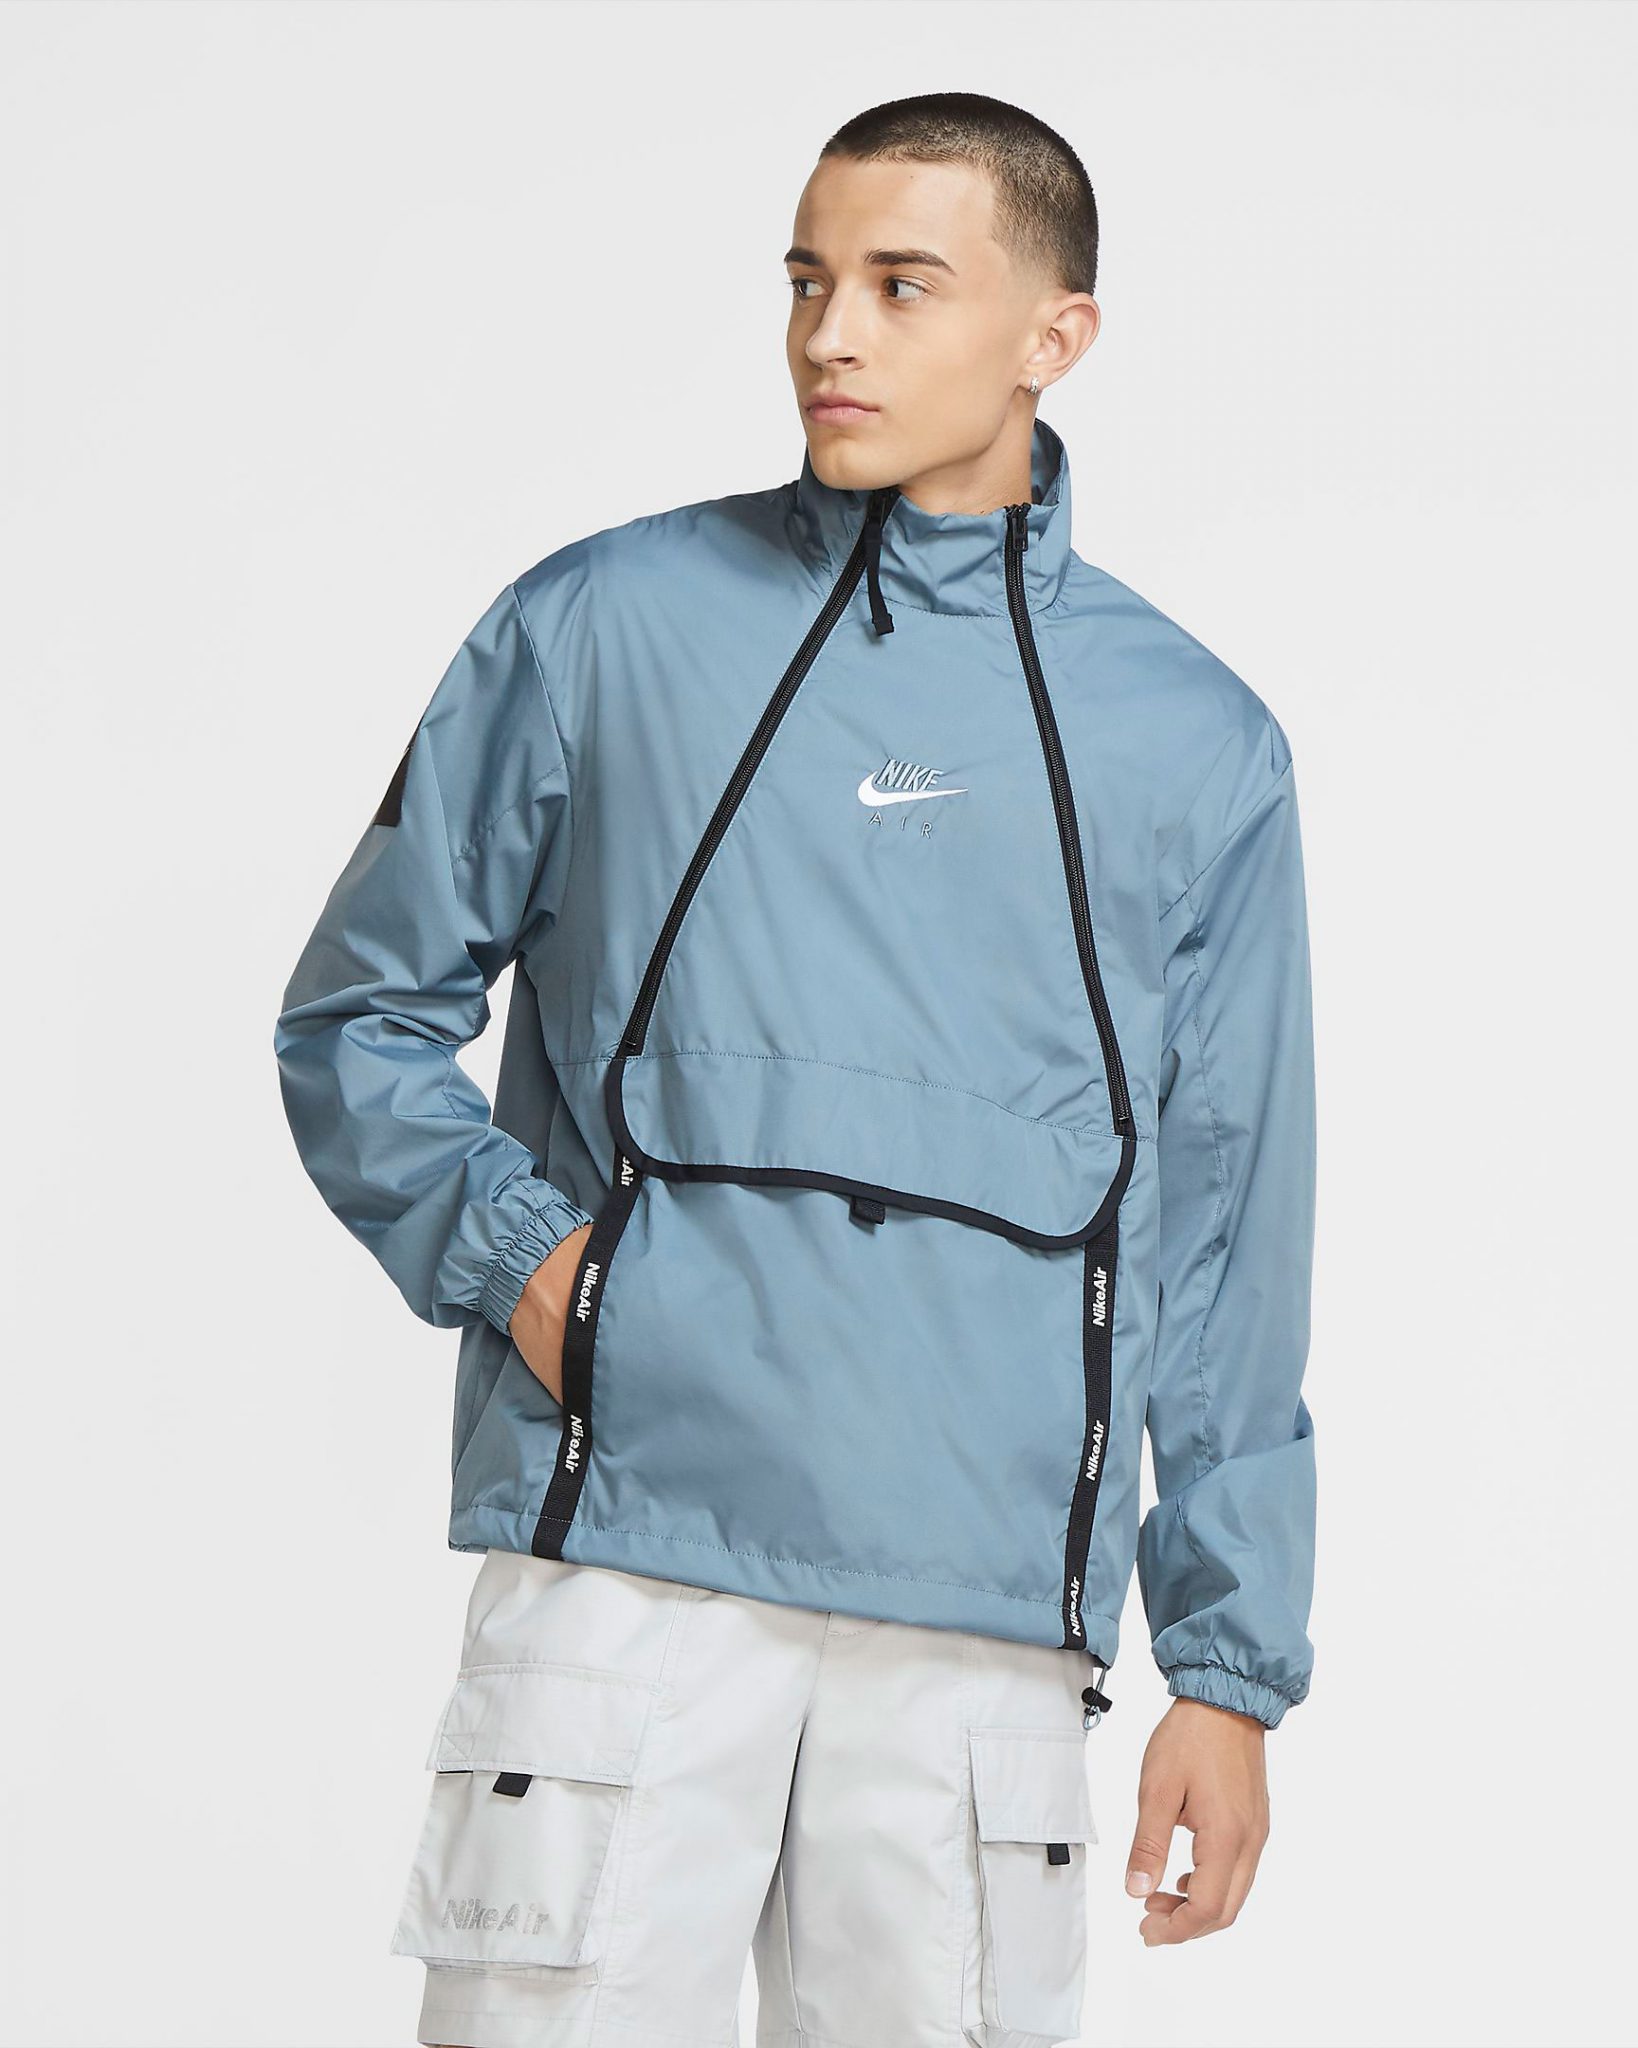 Nike Air Reflective Jackets for Fall 2020 | SportFits.com